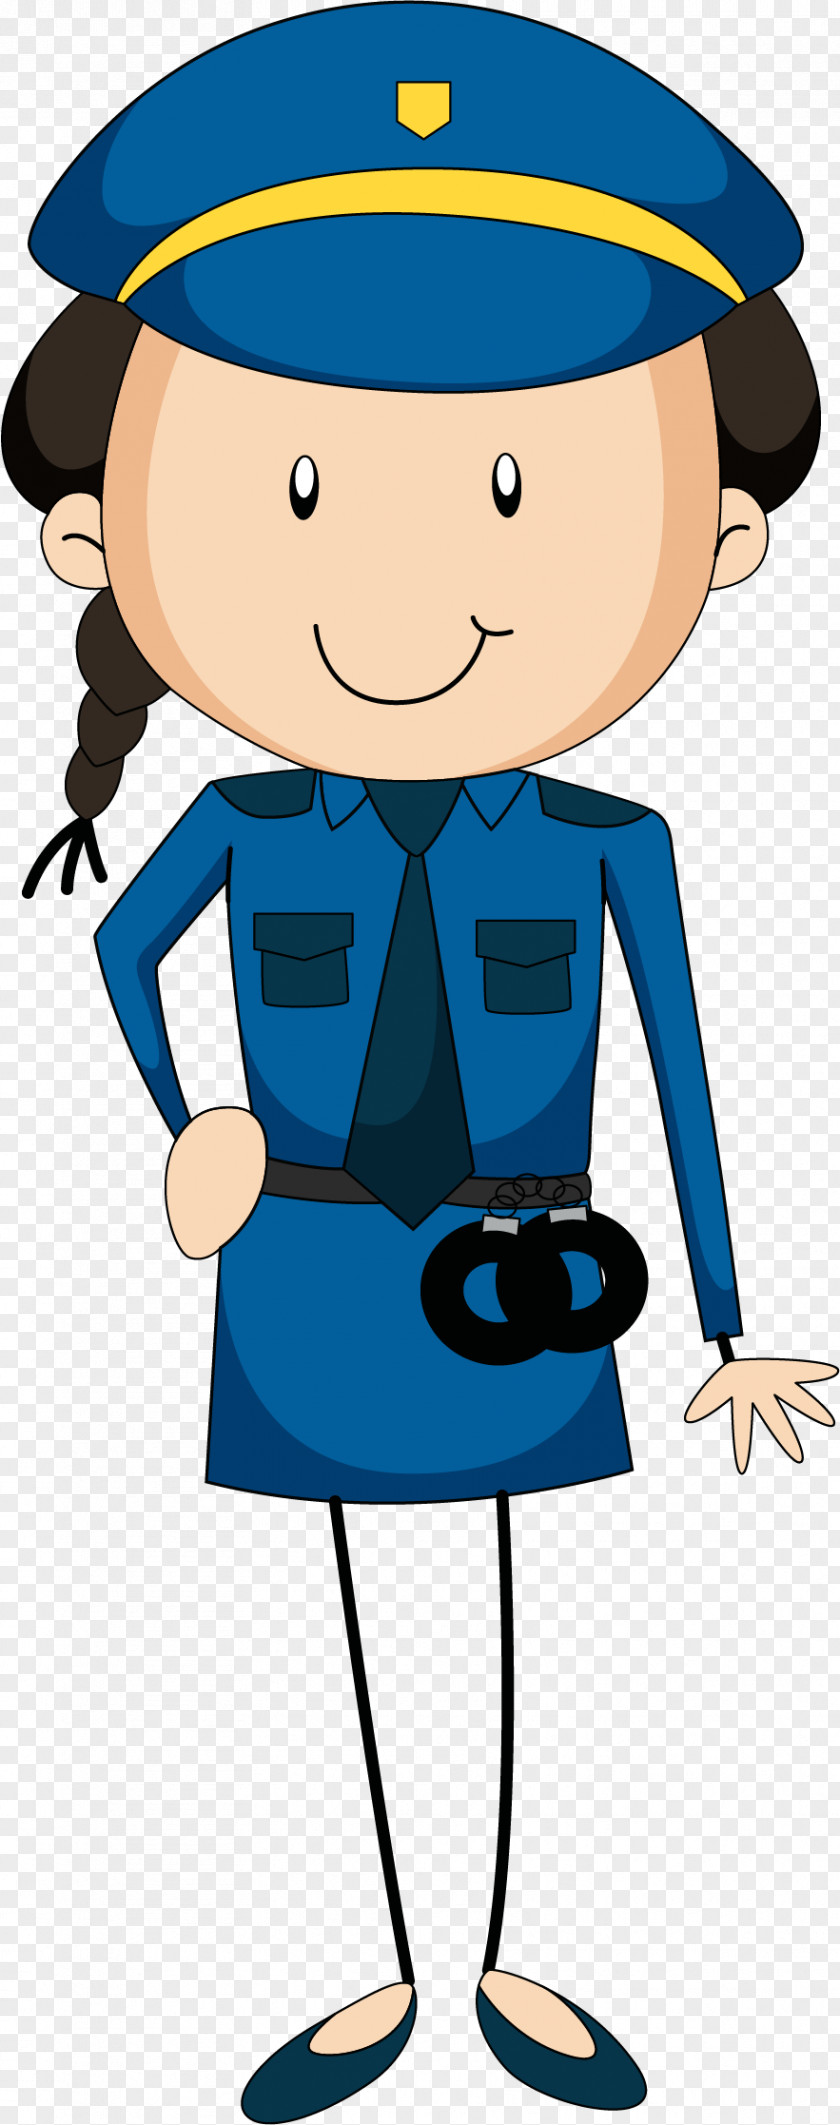 Cartoon Policewoman Royalty-free Stock Illustration PNG